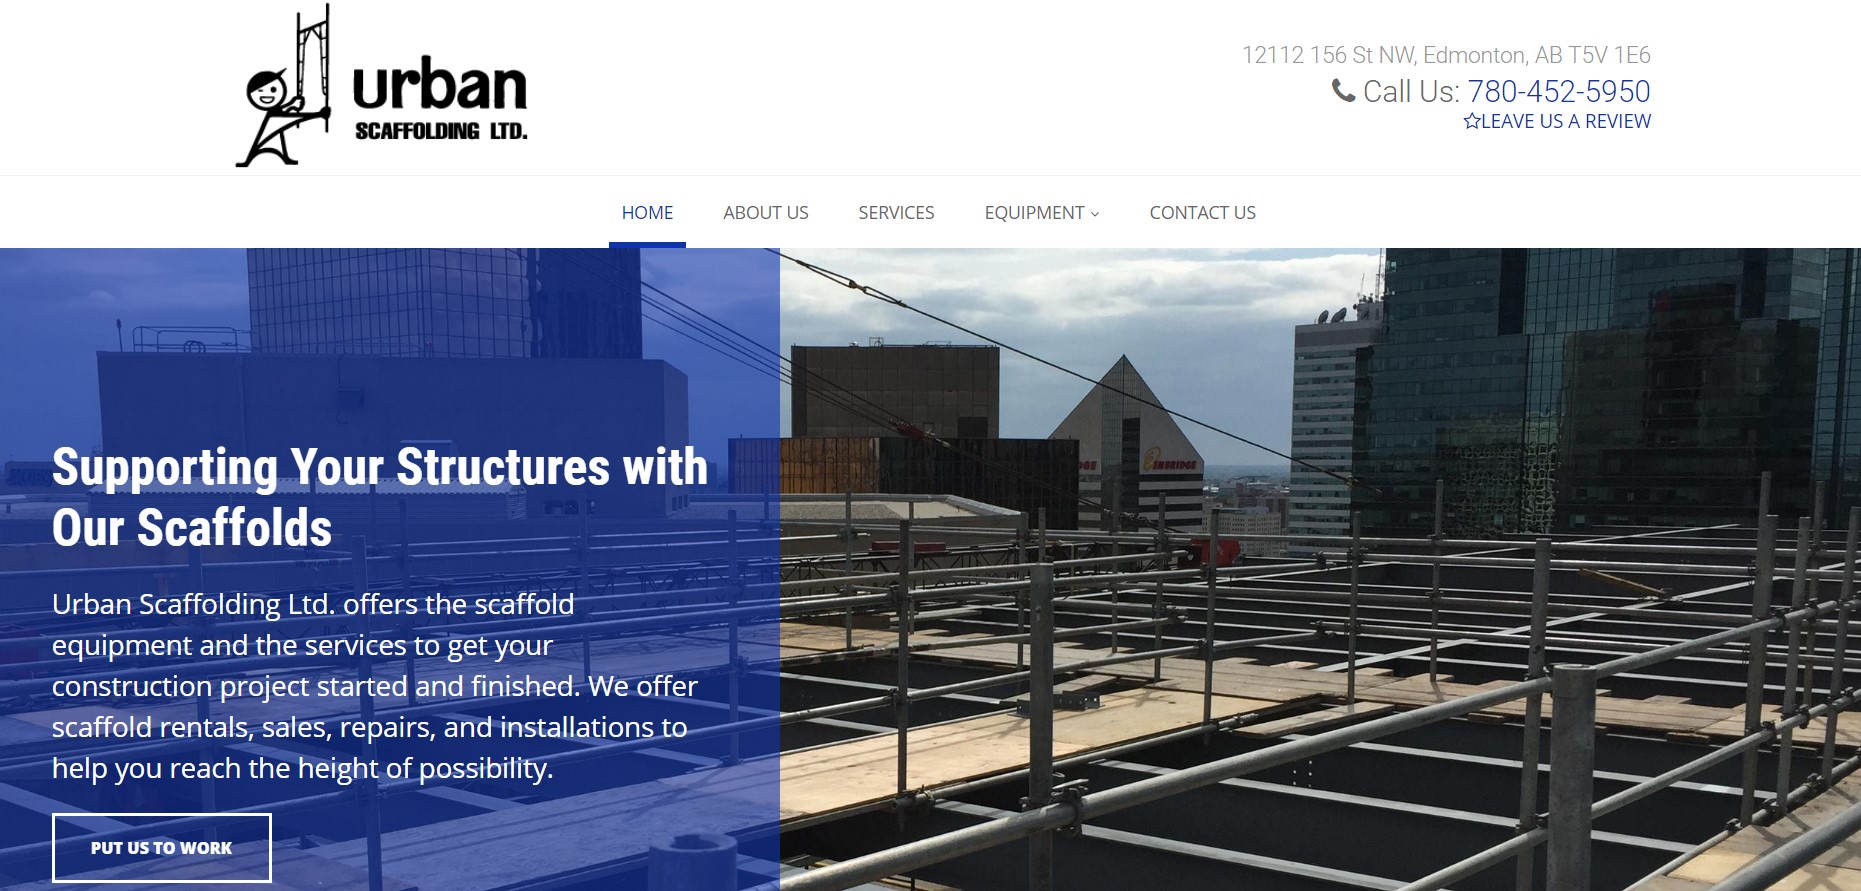 urban scaffolding service in edmonton